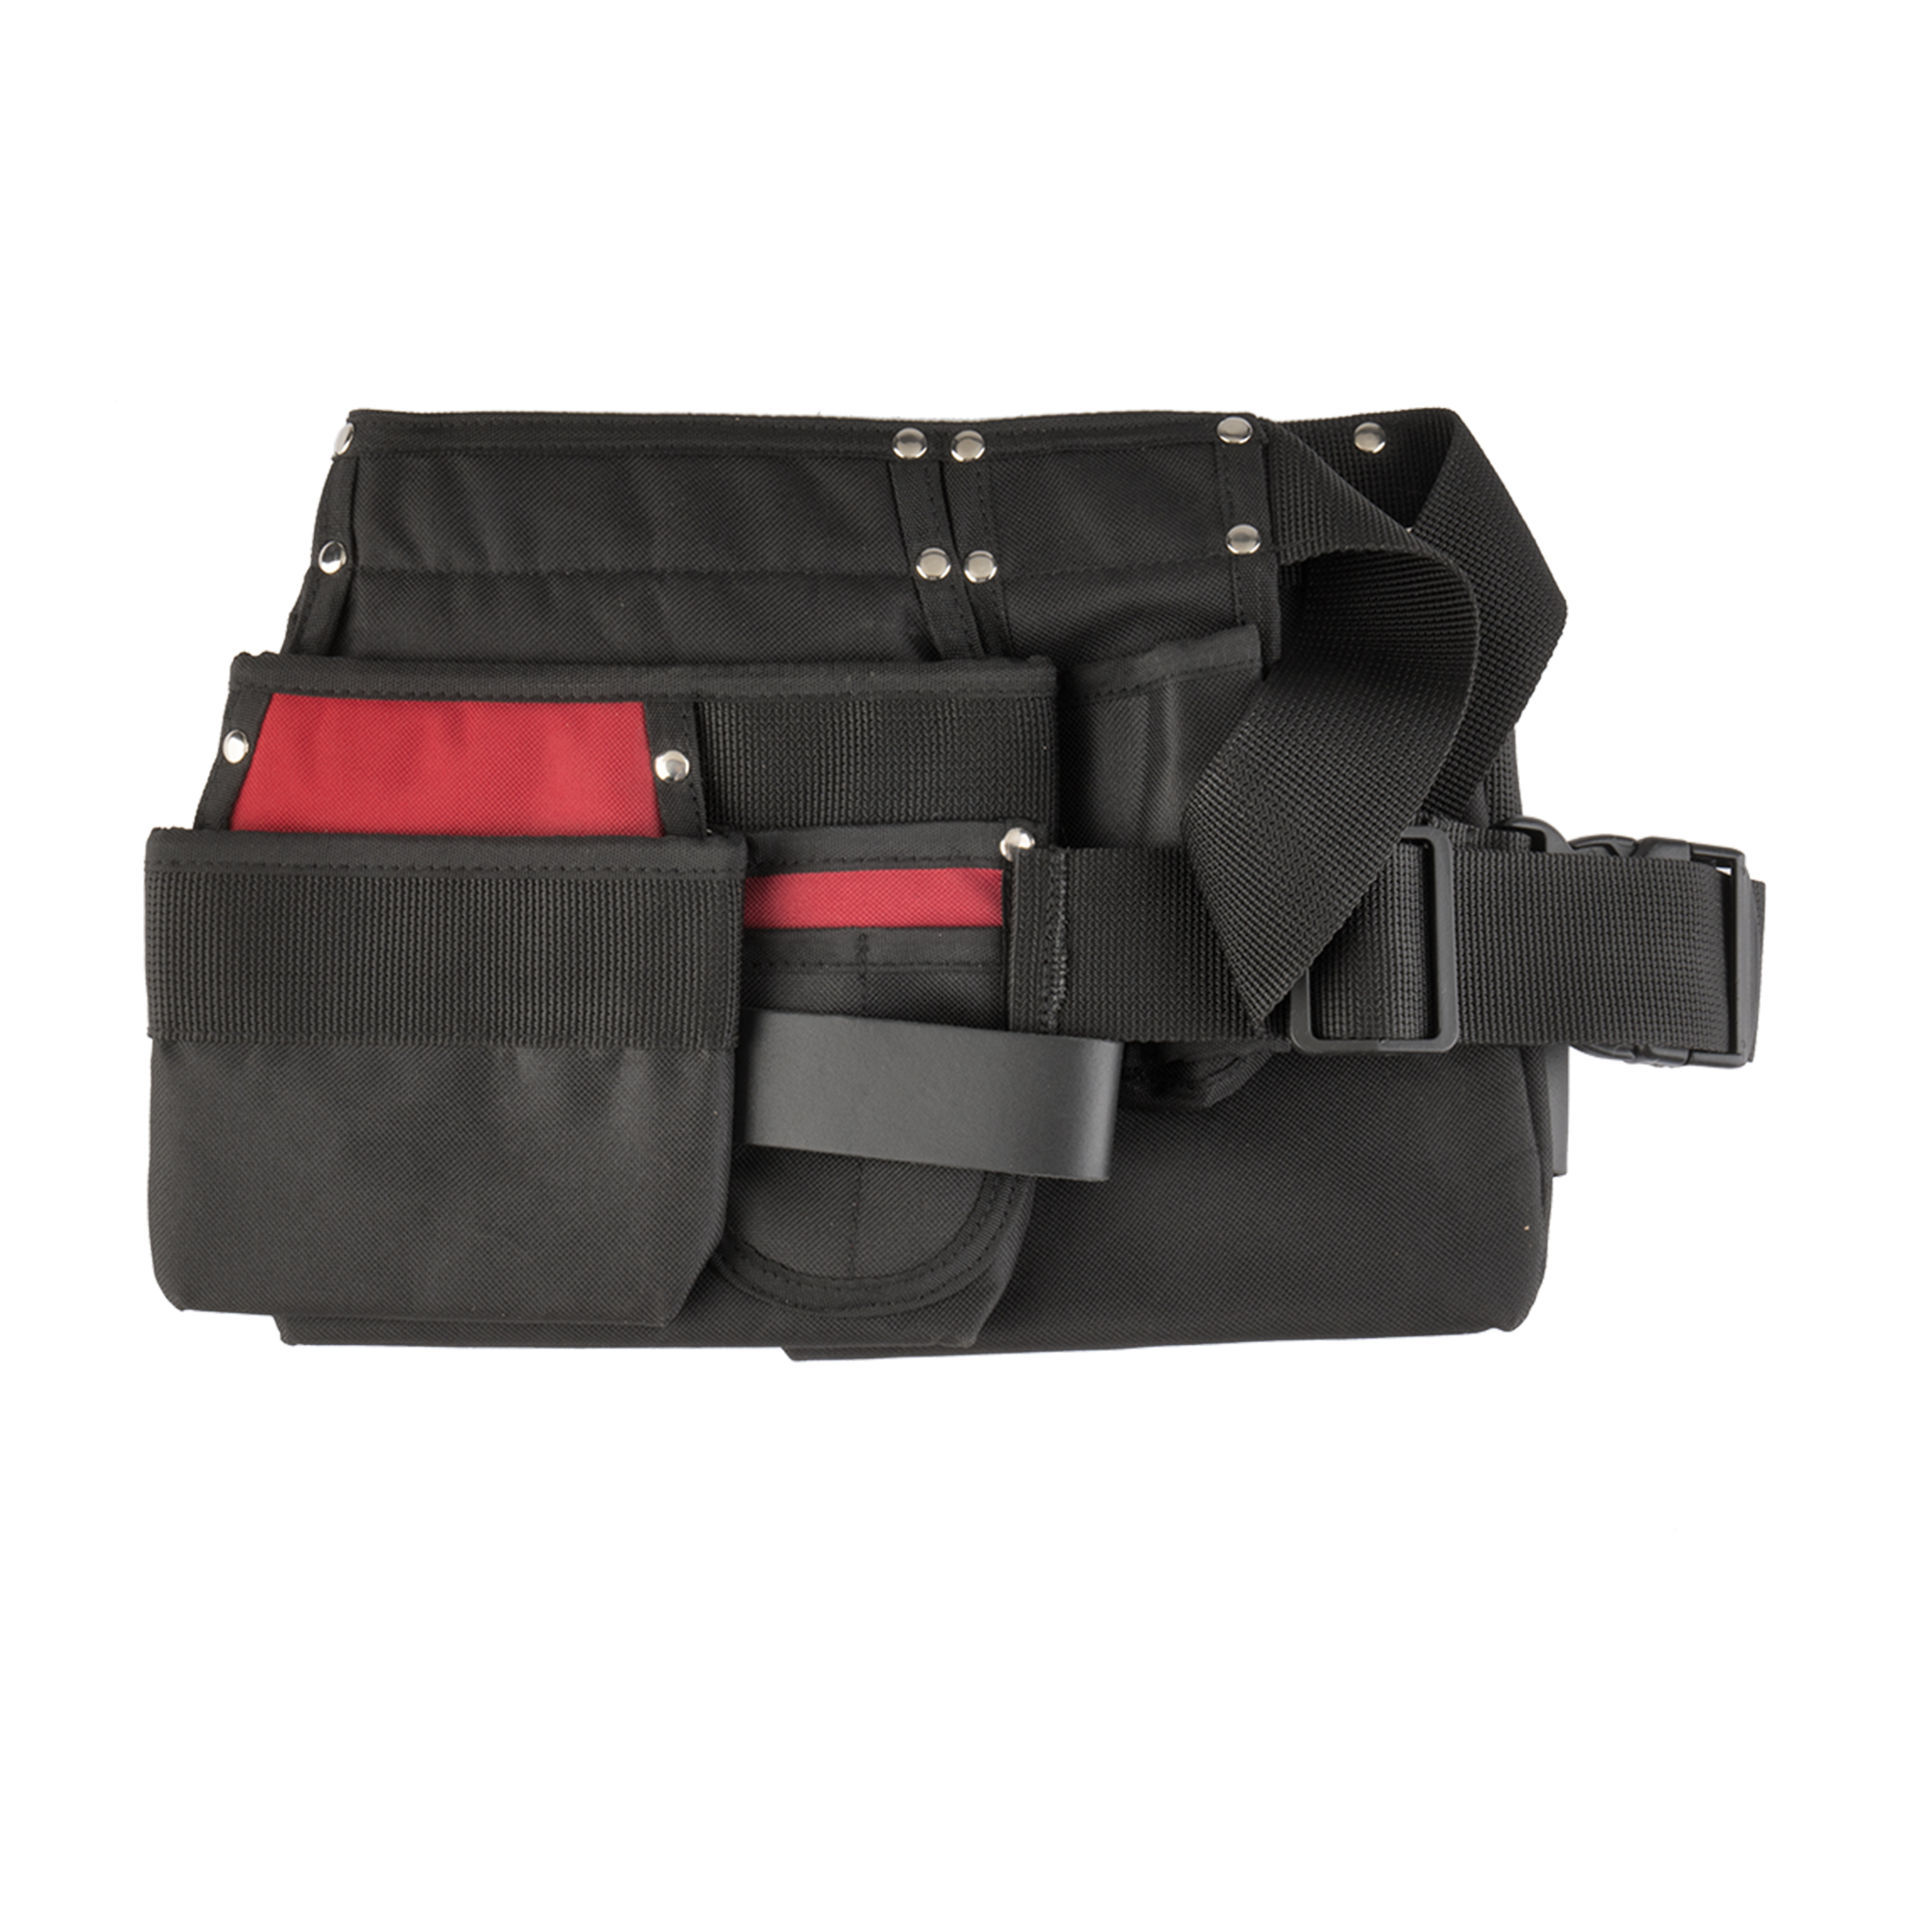 Cinturón porta herramientas piel Bellota 6 bolsillos - Suministros